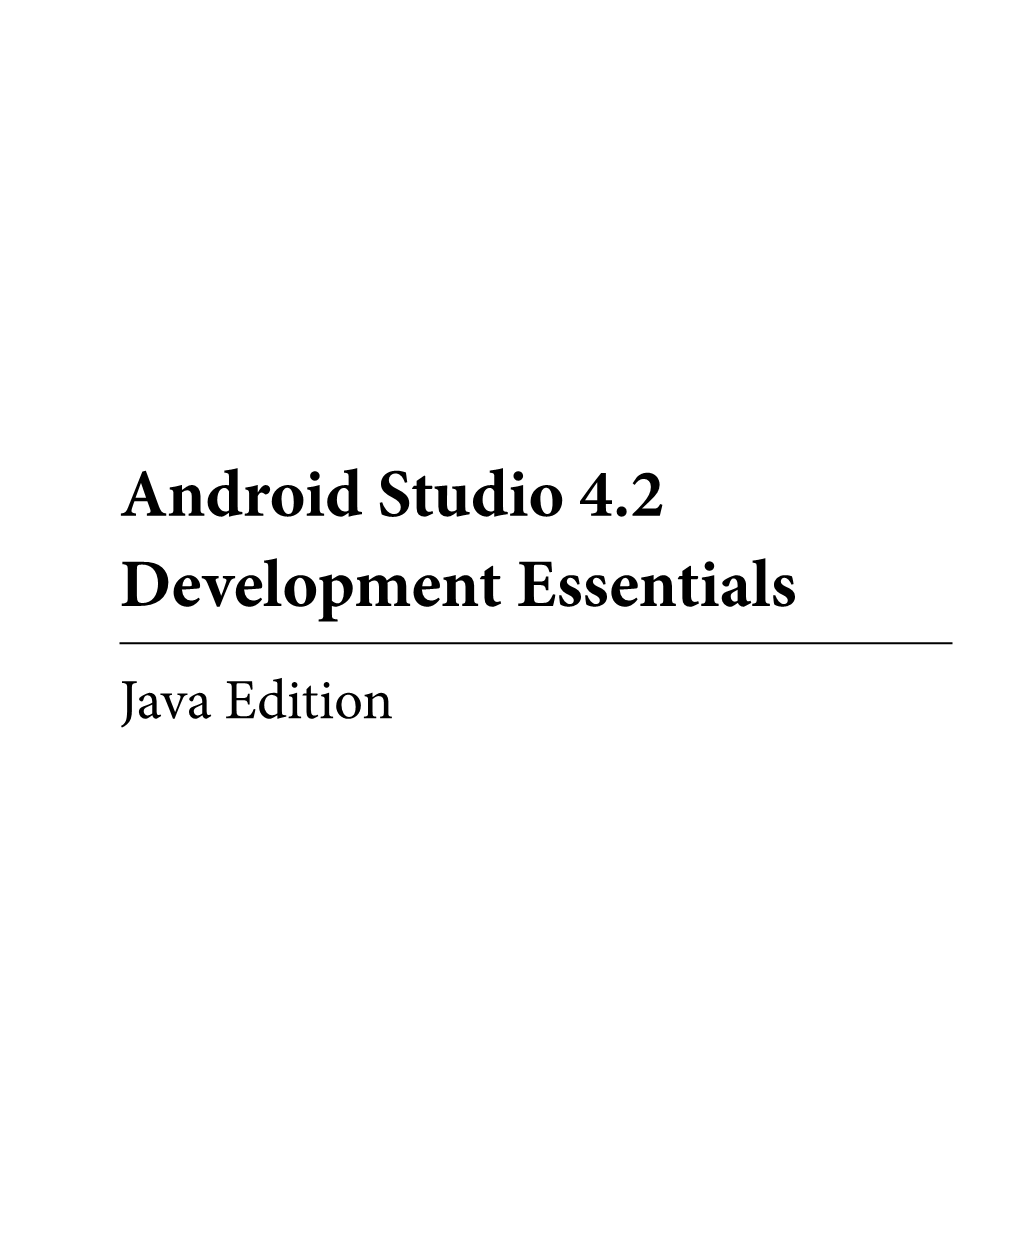 Android Studio 4.2 Development Essentials